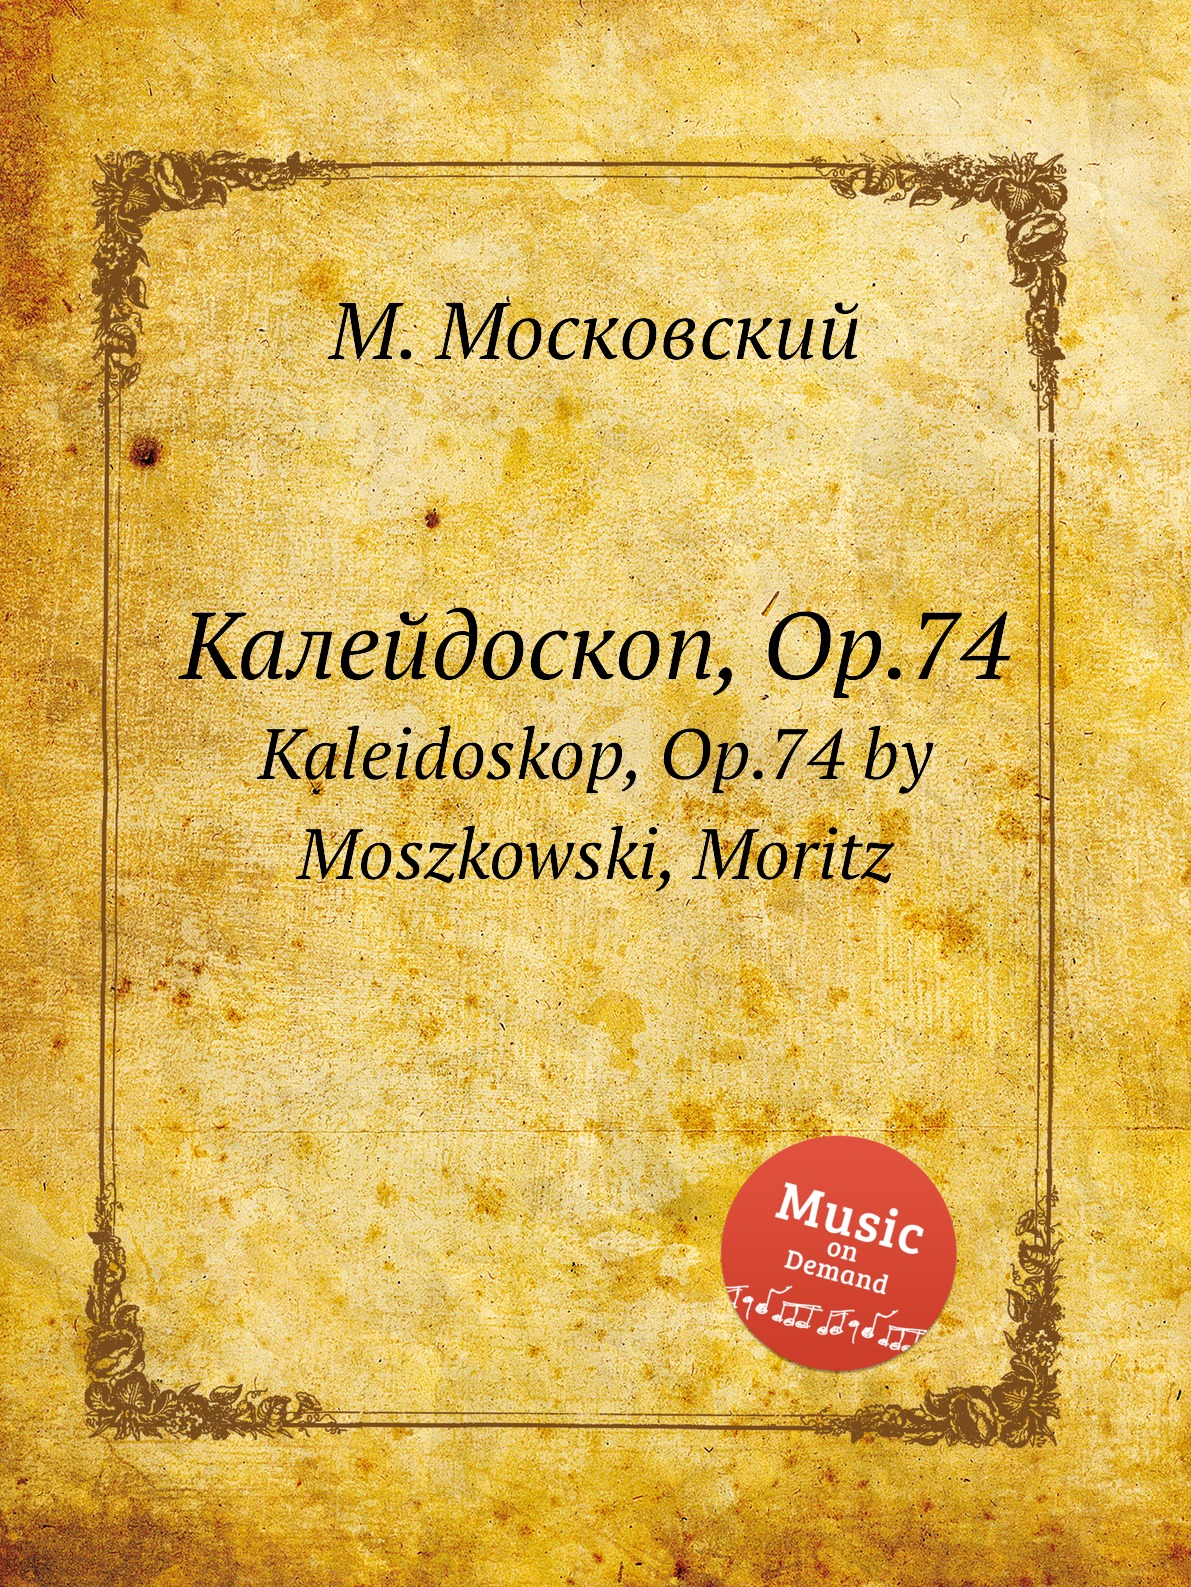 фото Книга калейдоскоп, op.74. kaleidoskop, op.74 by moszkowski, moritz музбука